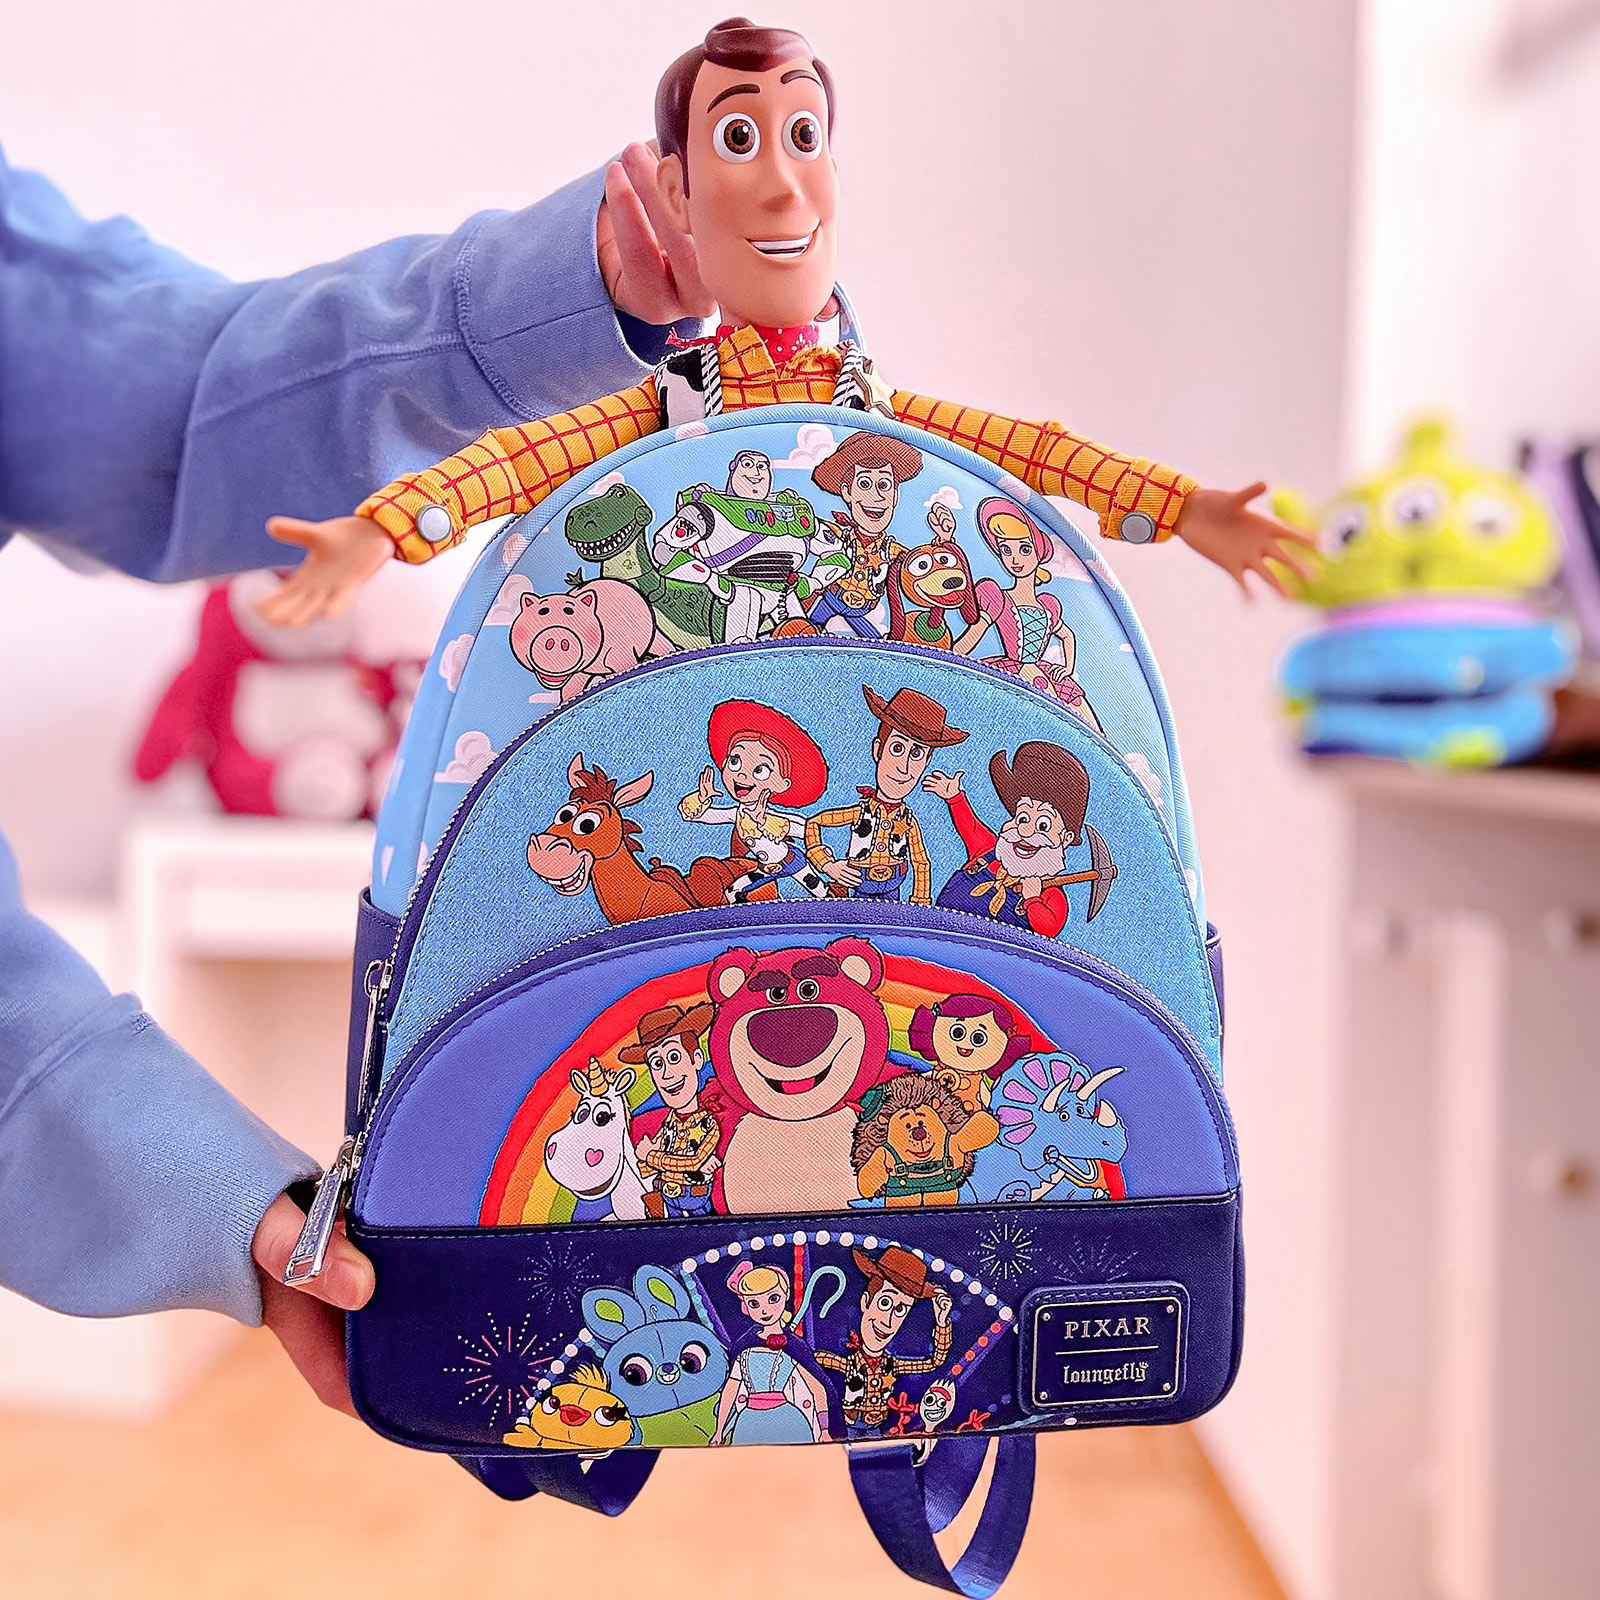 Pixar - Story Movie Mini Backpack